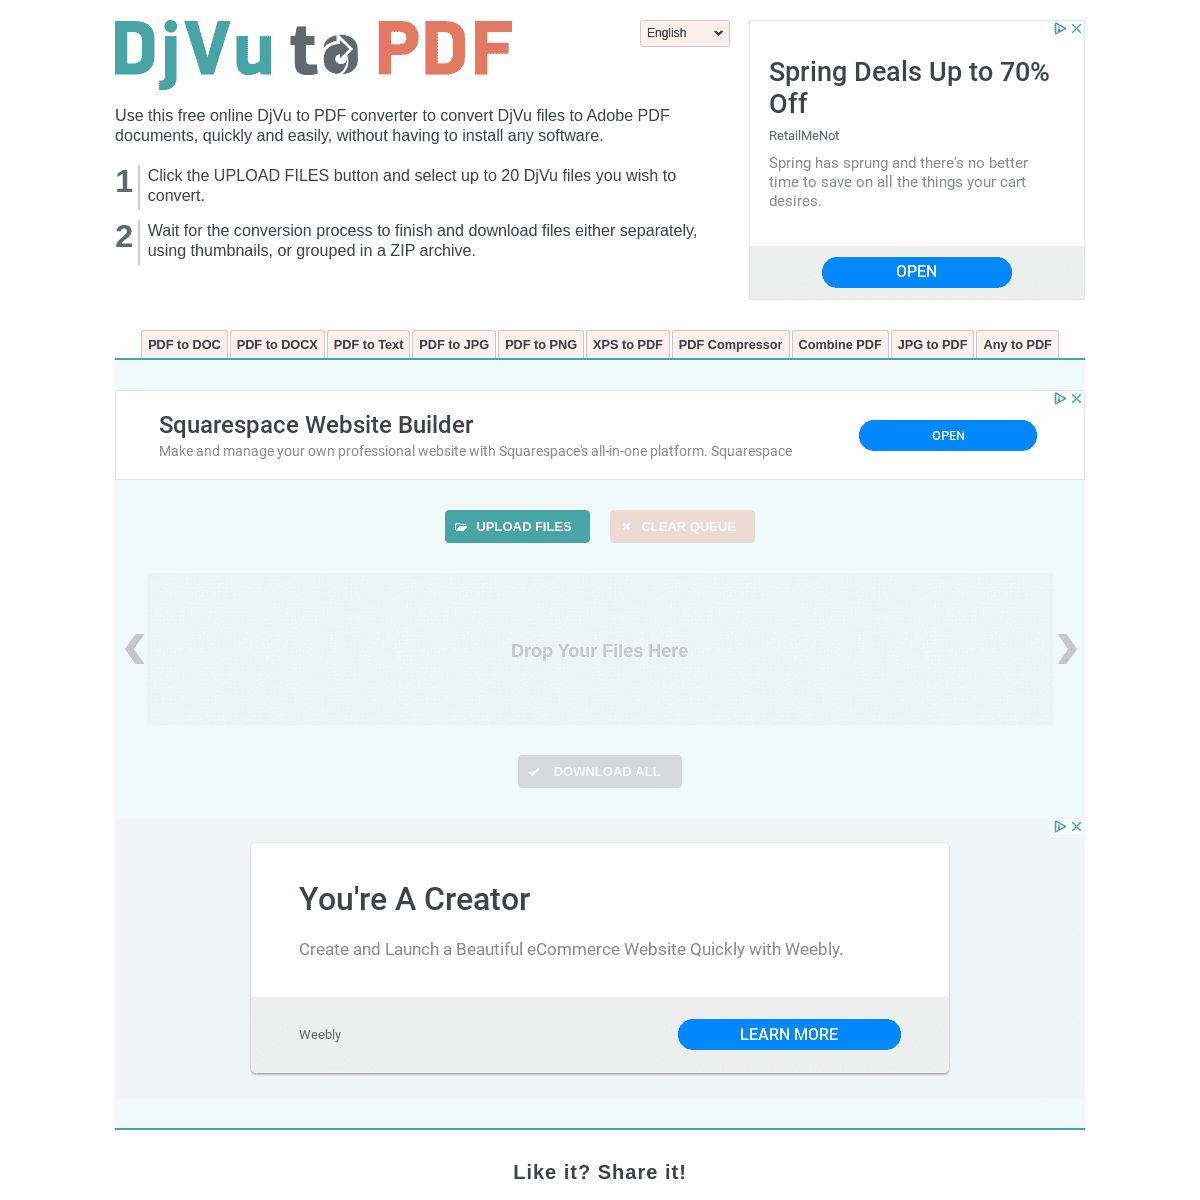 A complete backup of djvu2pdf.com